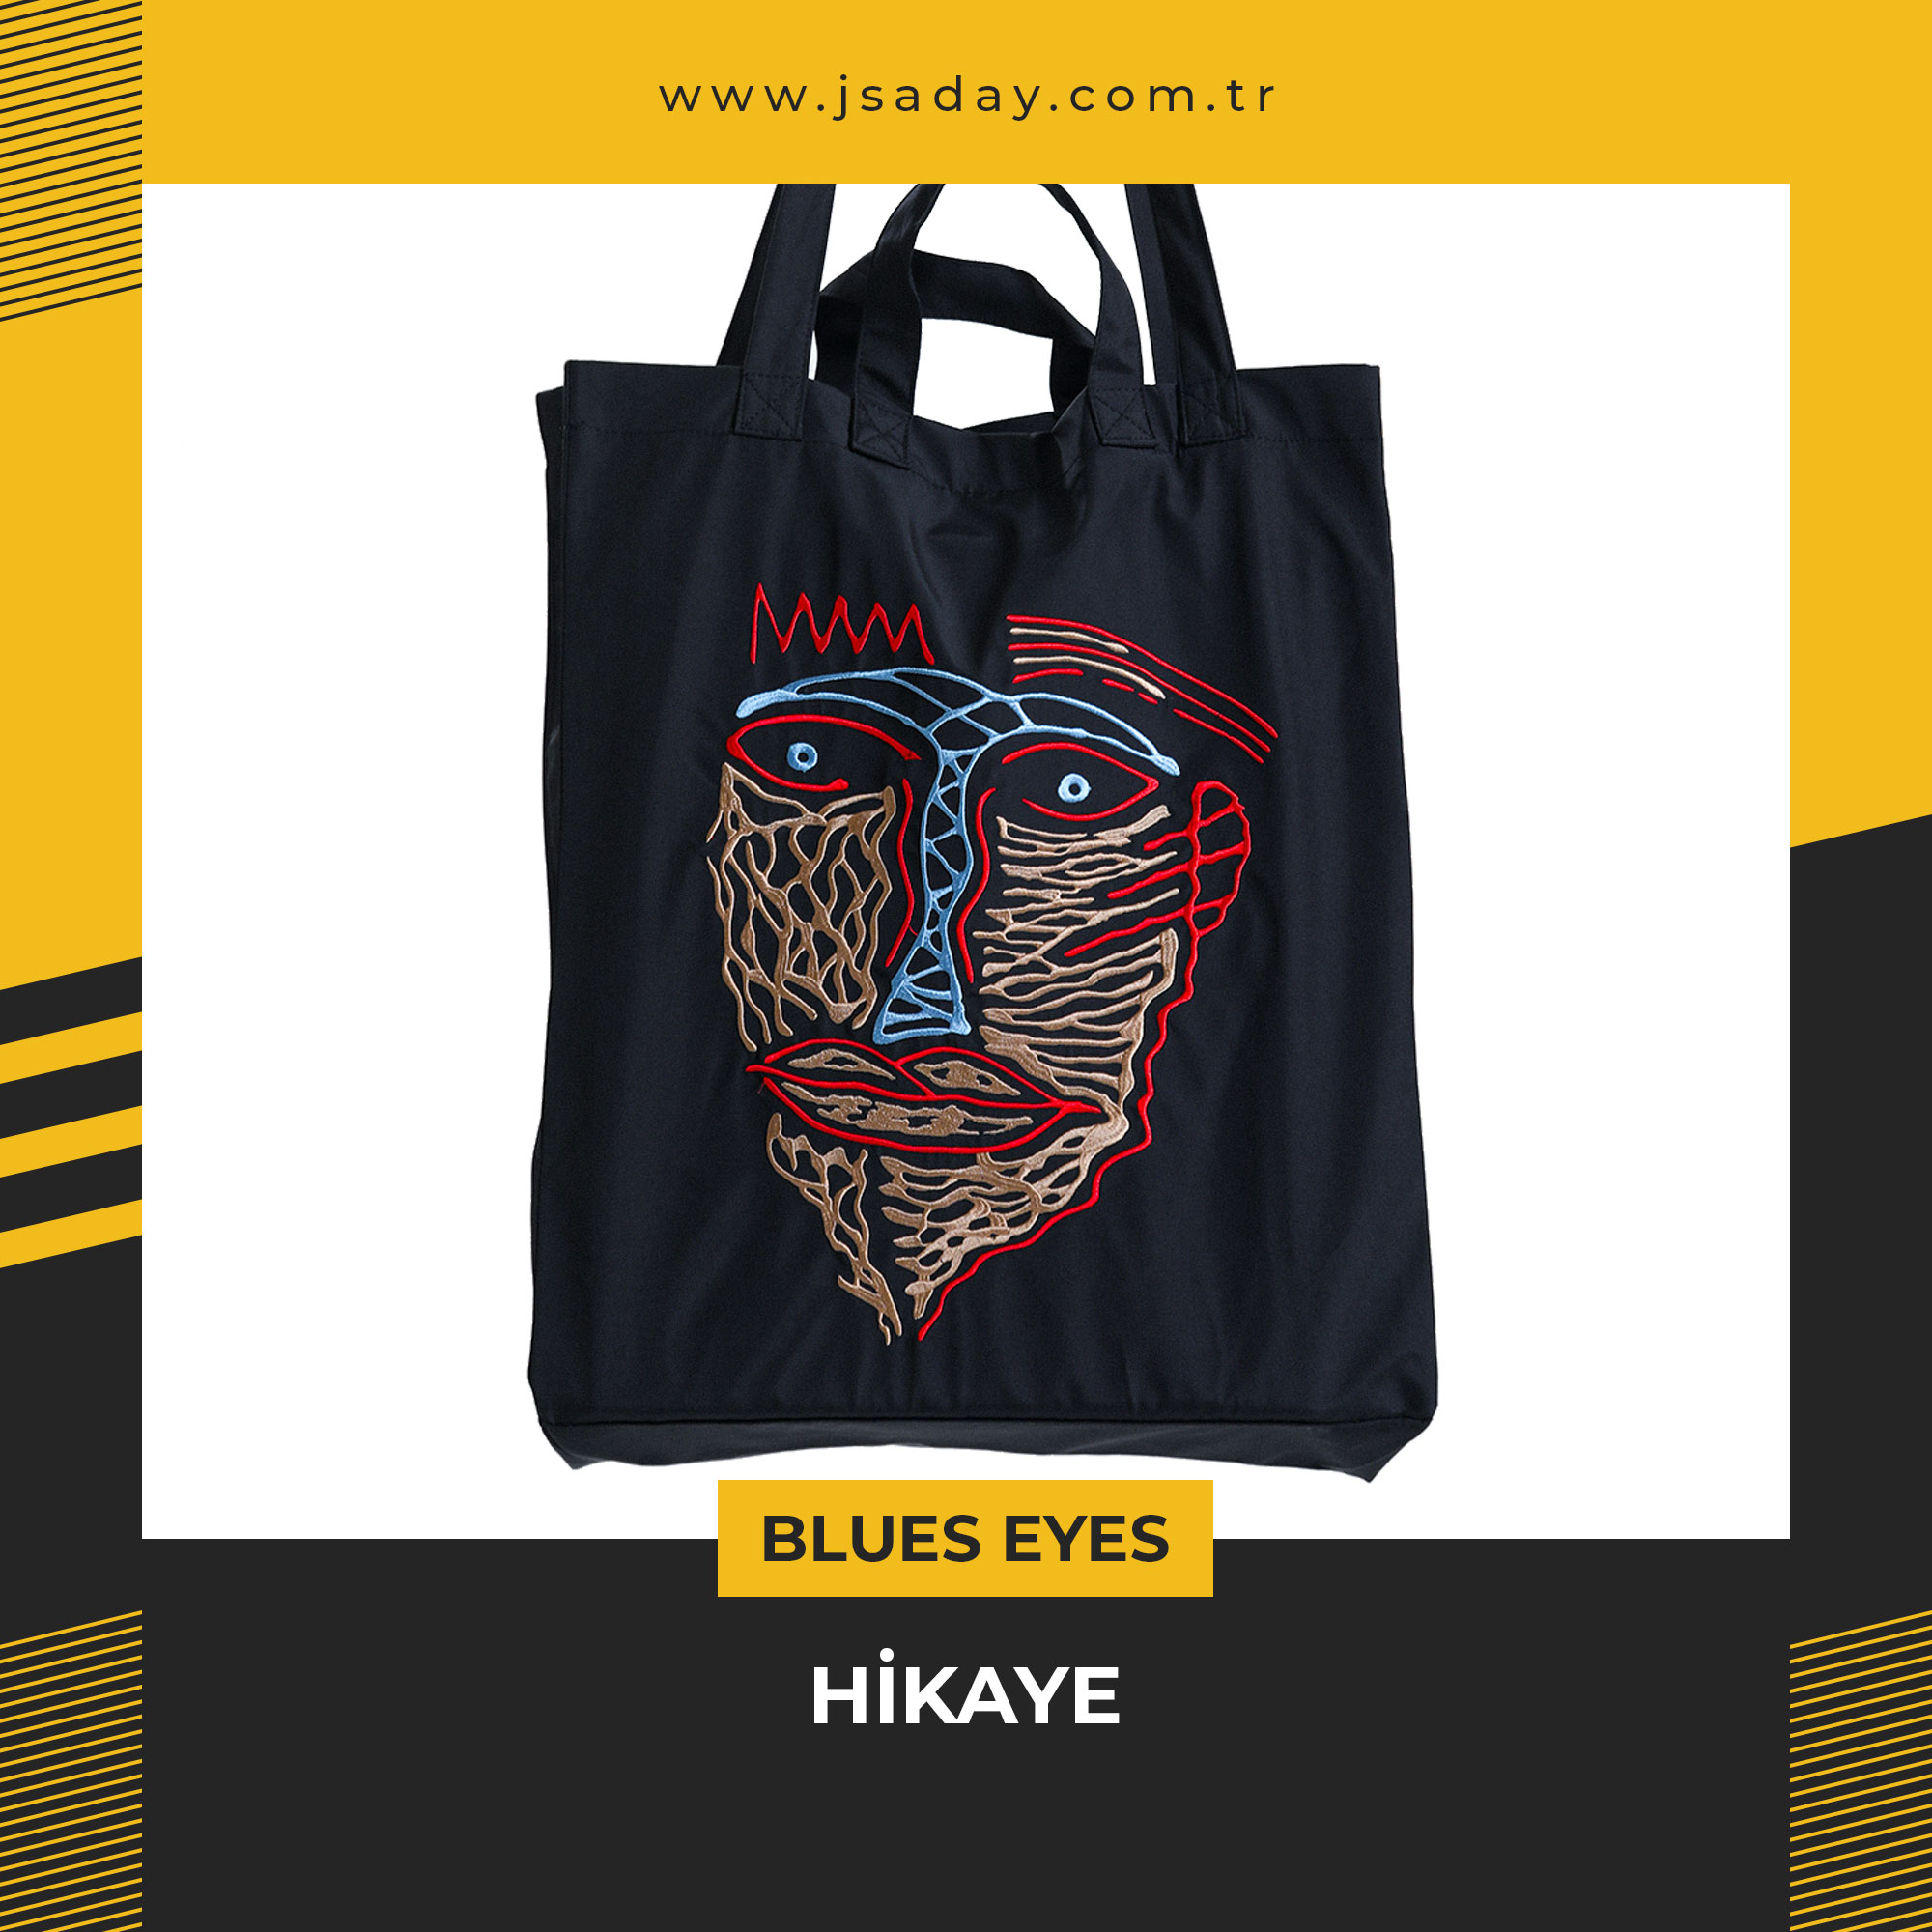 Hikaye: BLUES EYES